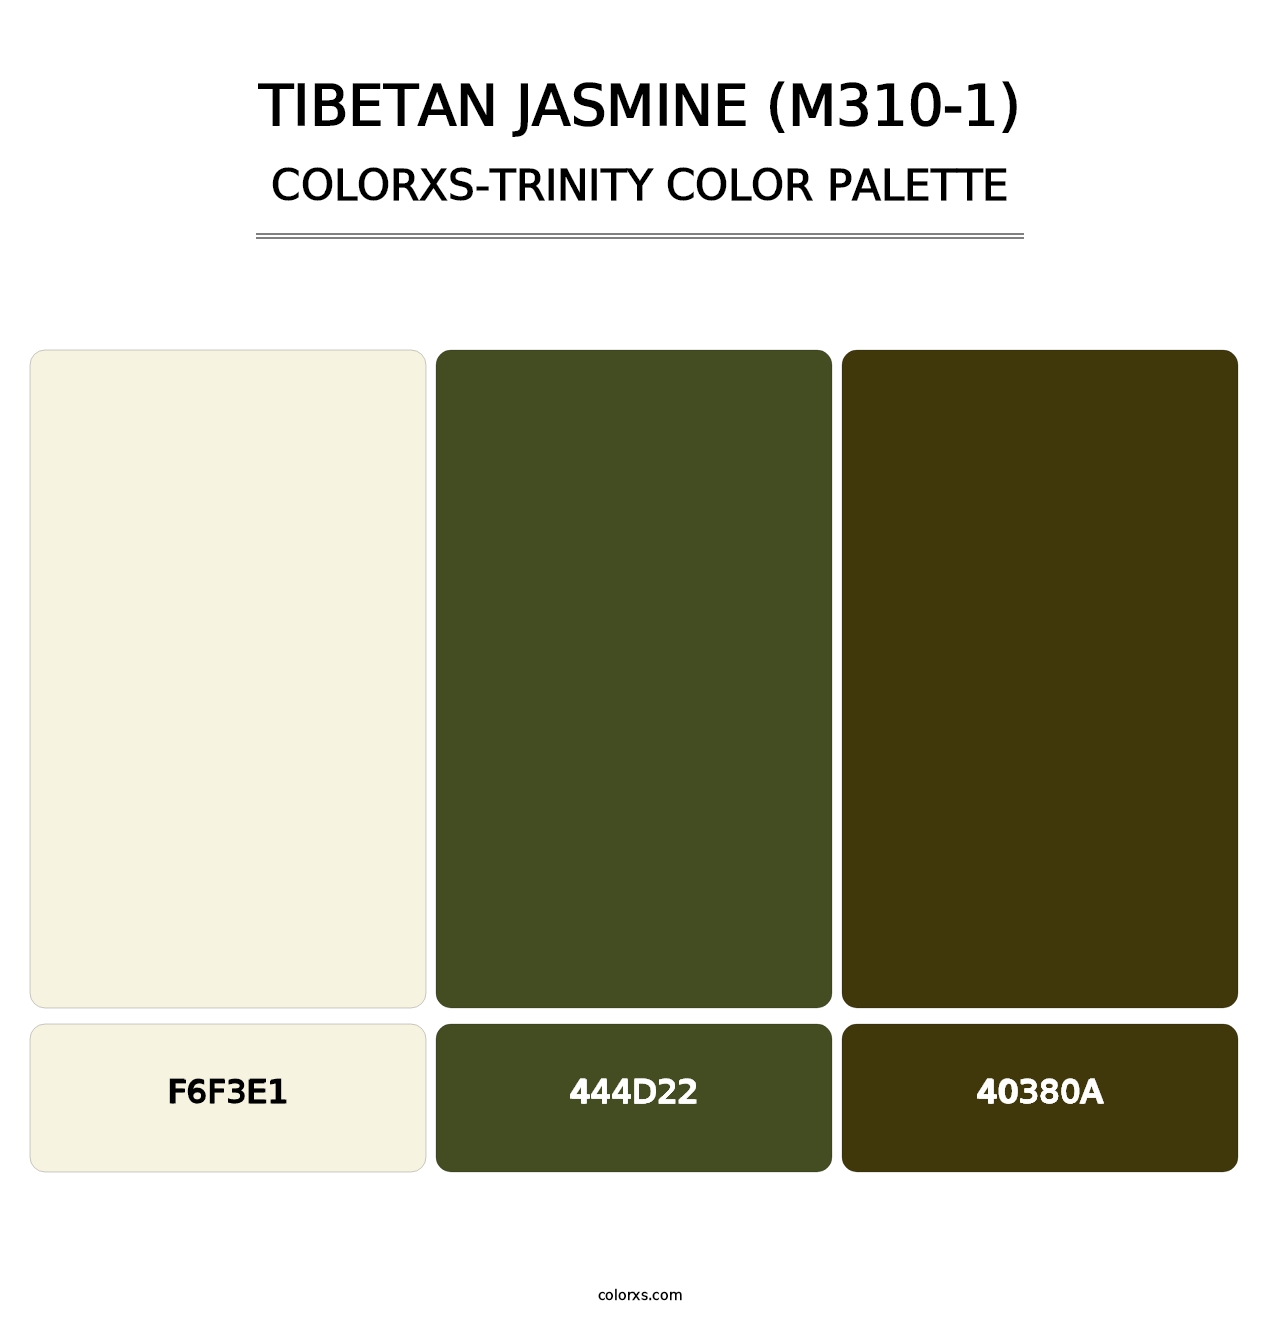 Tibetan Jasmine (M310-1) - Colorxs Trinity Palette